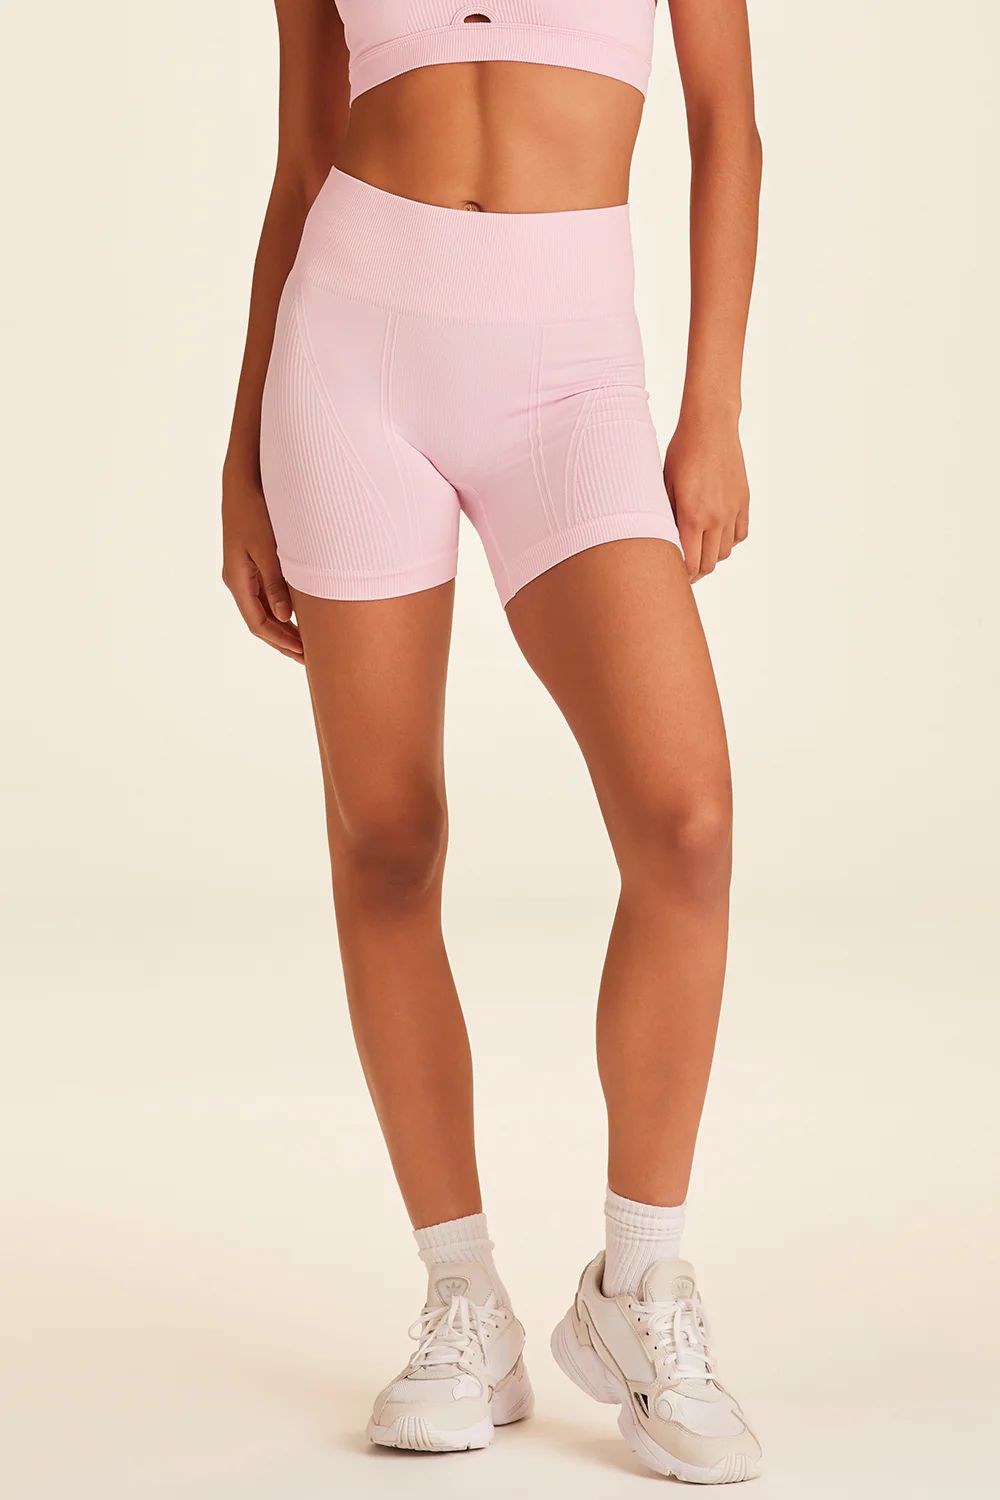 Barre Seamless Short - Pink Seamless Shorts | Legging Shorts | Alala | Alala